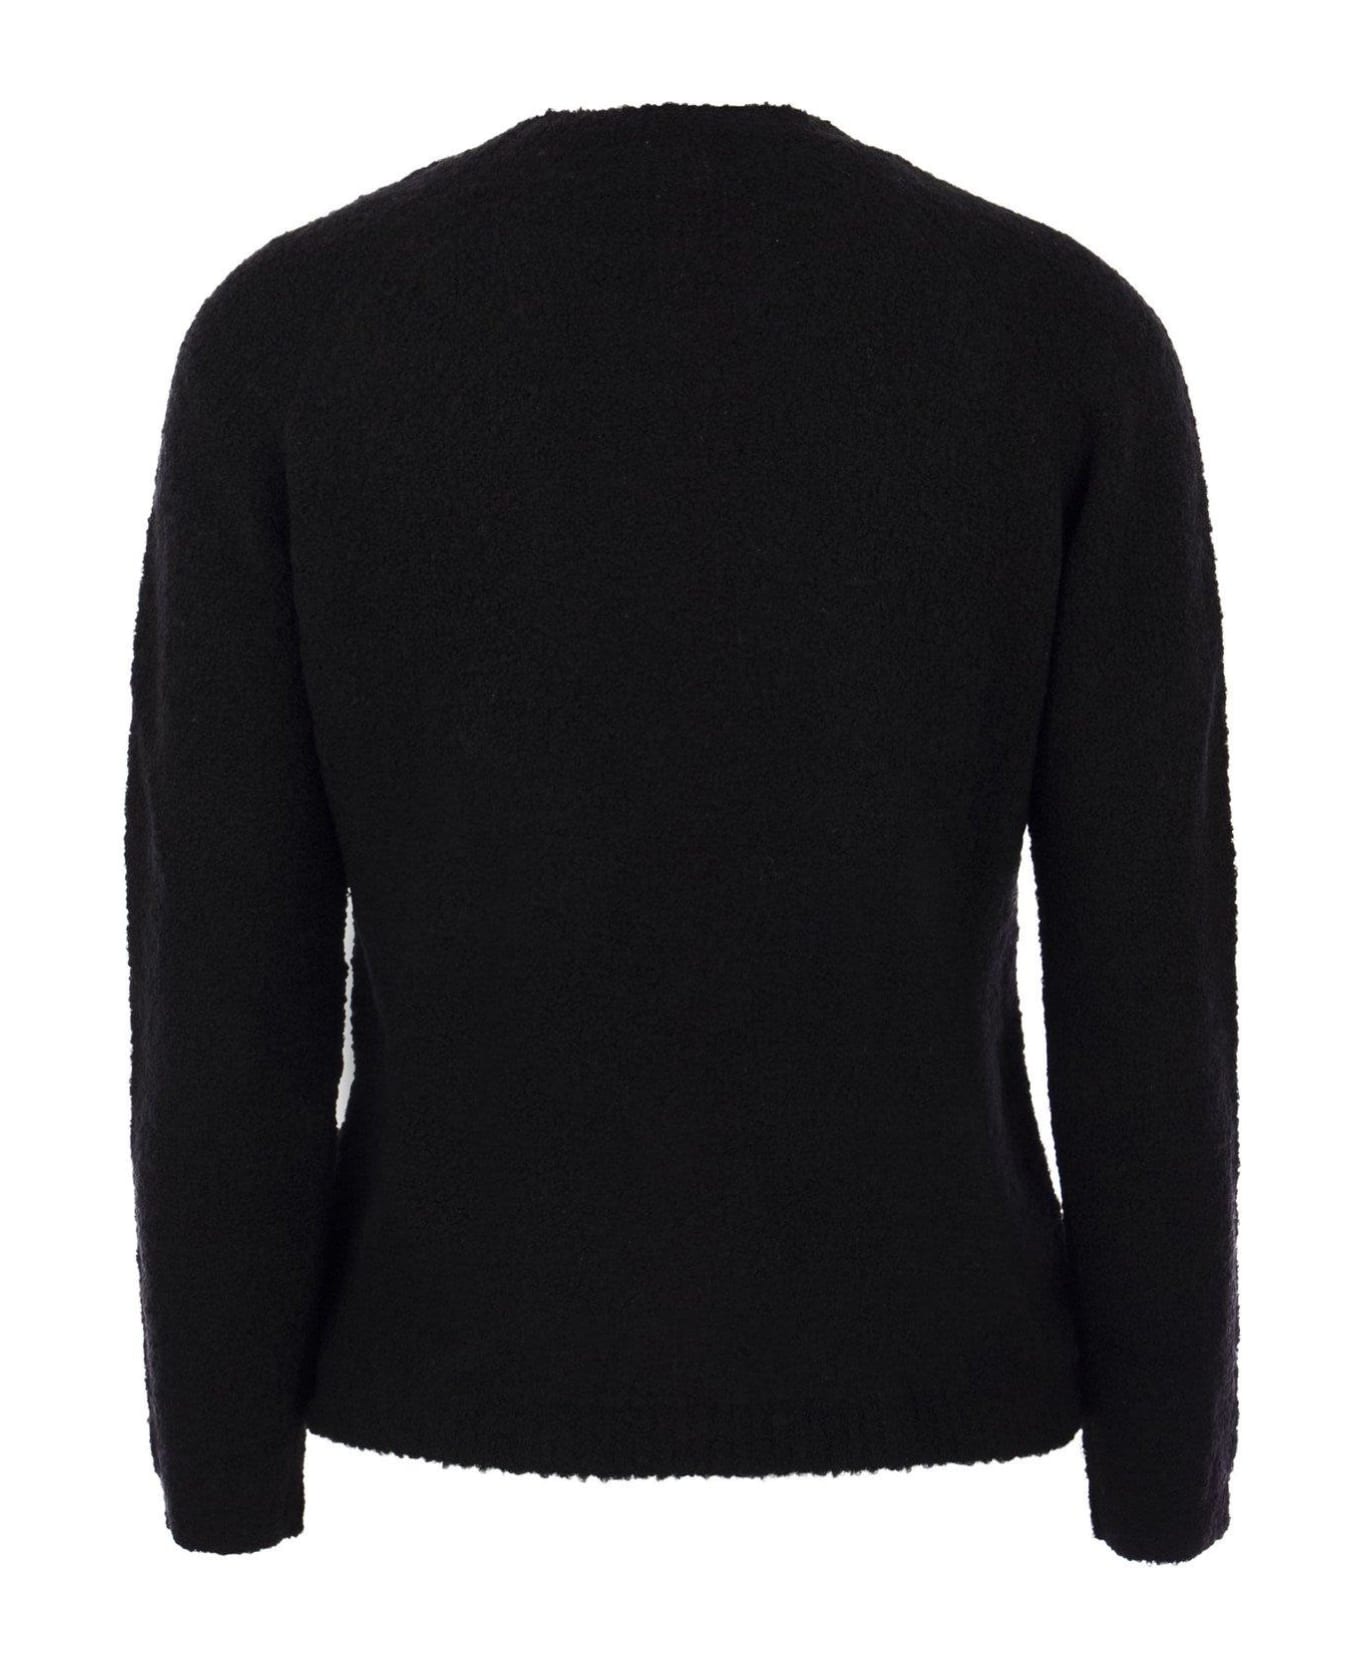 Max Mara Studio Fify Sweater - Black ニットウェア